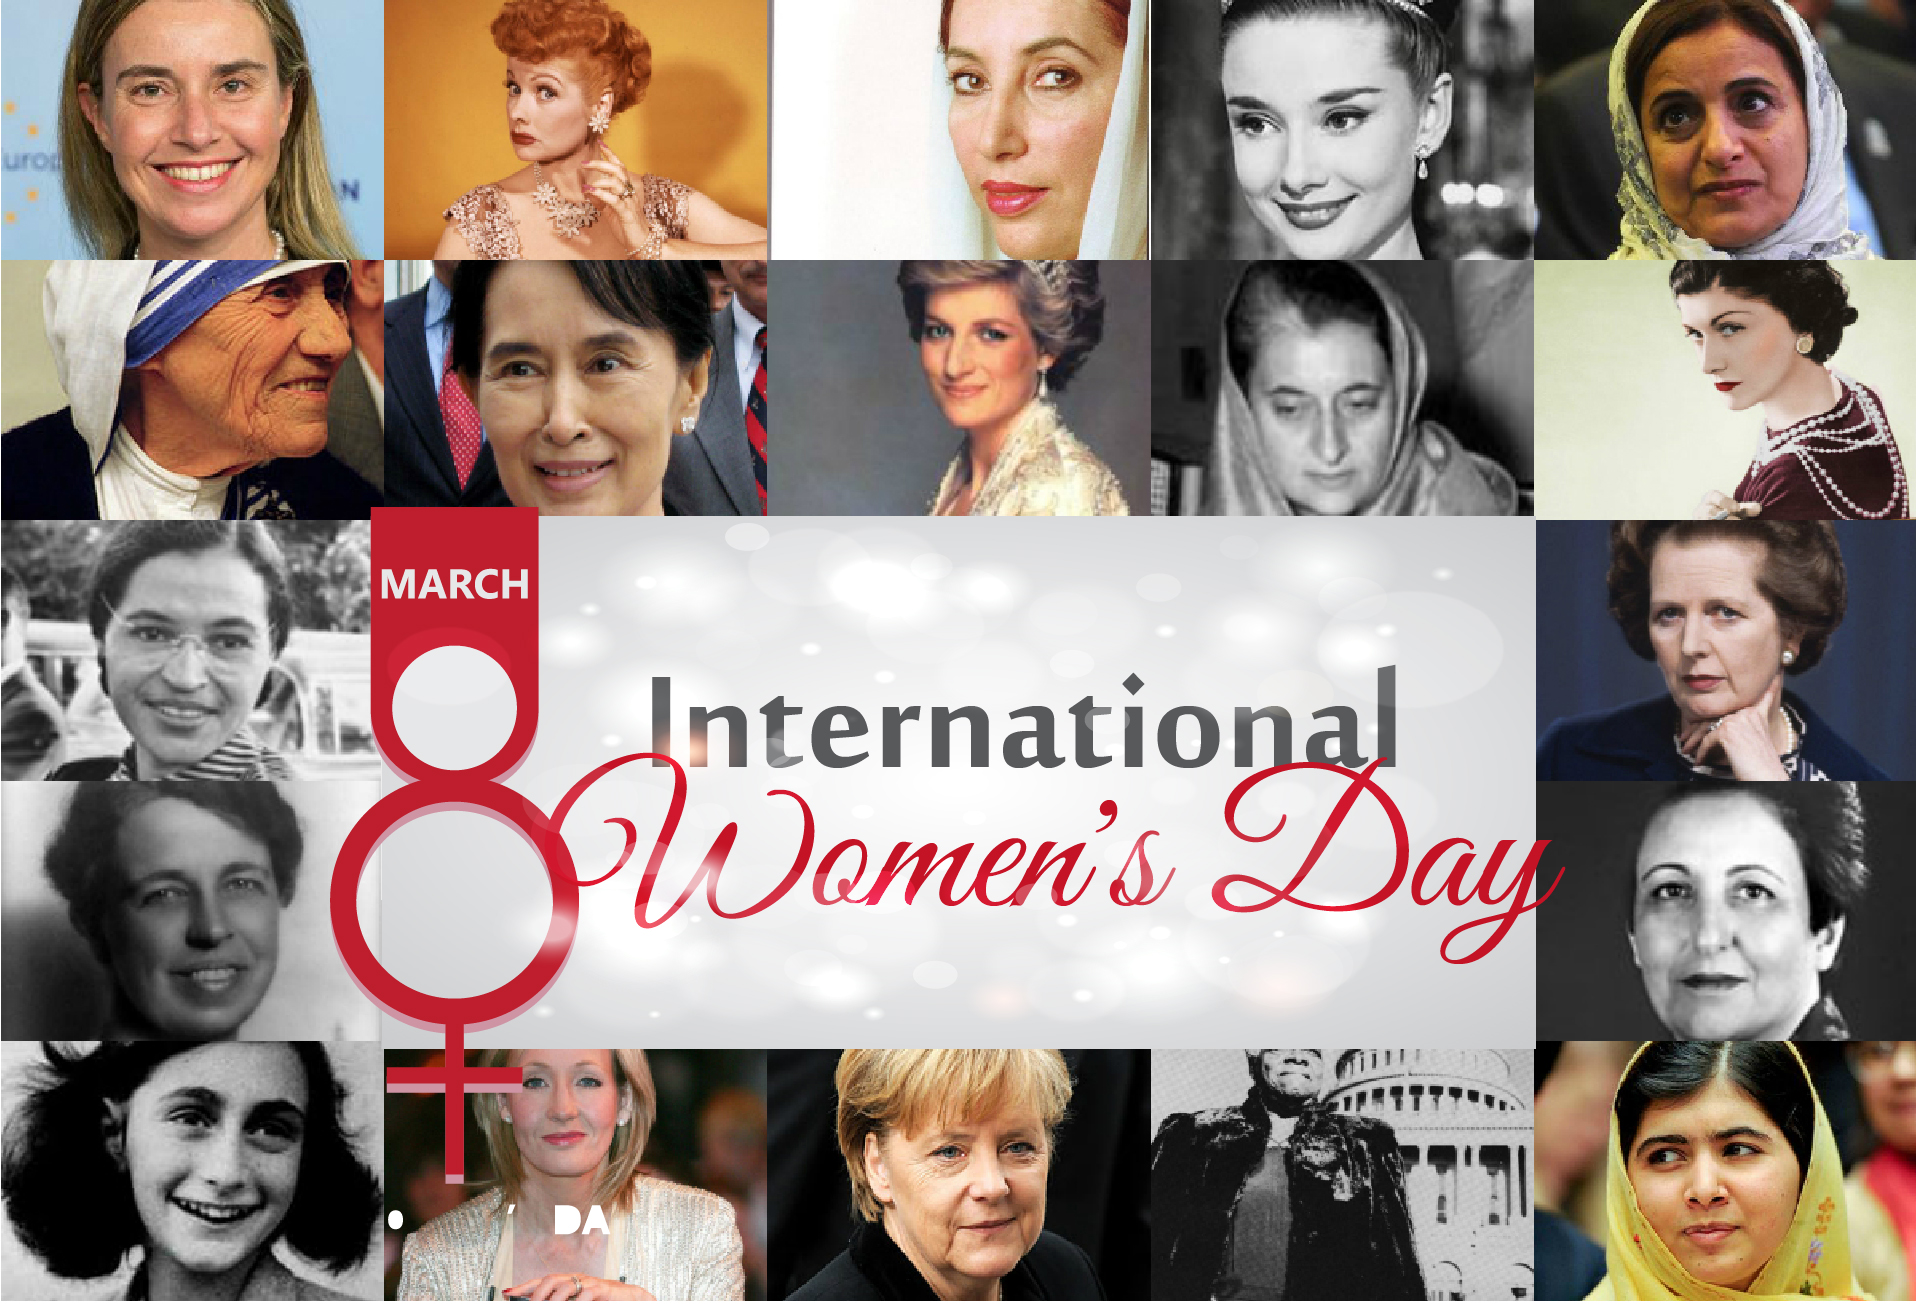 March 8: International Women’s Day